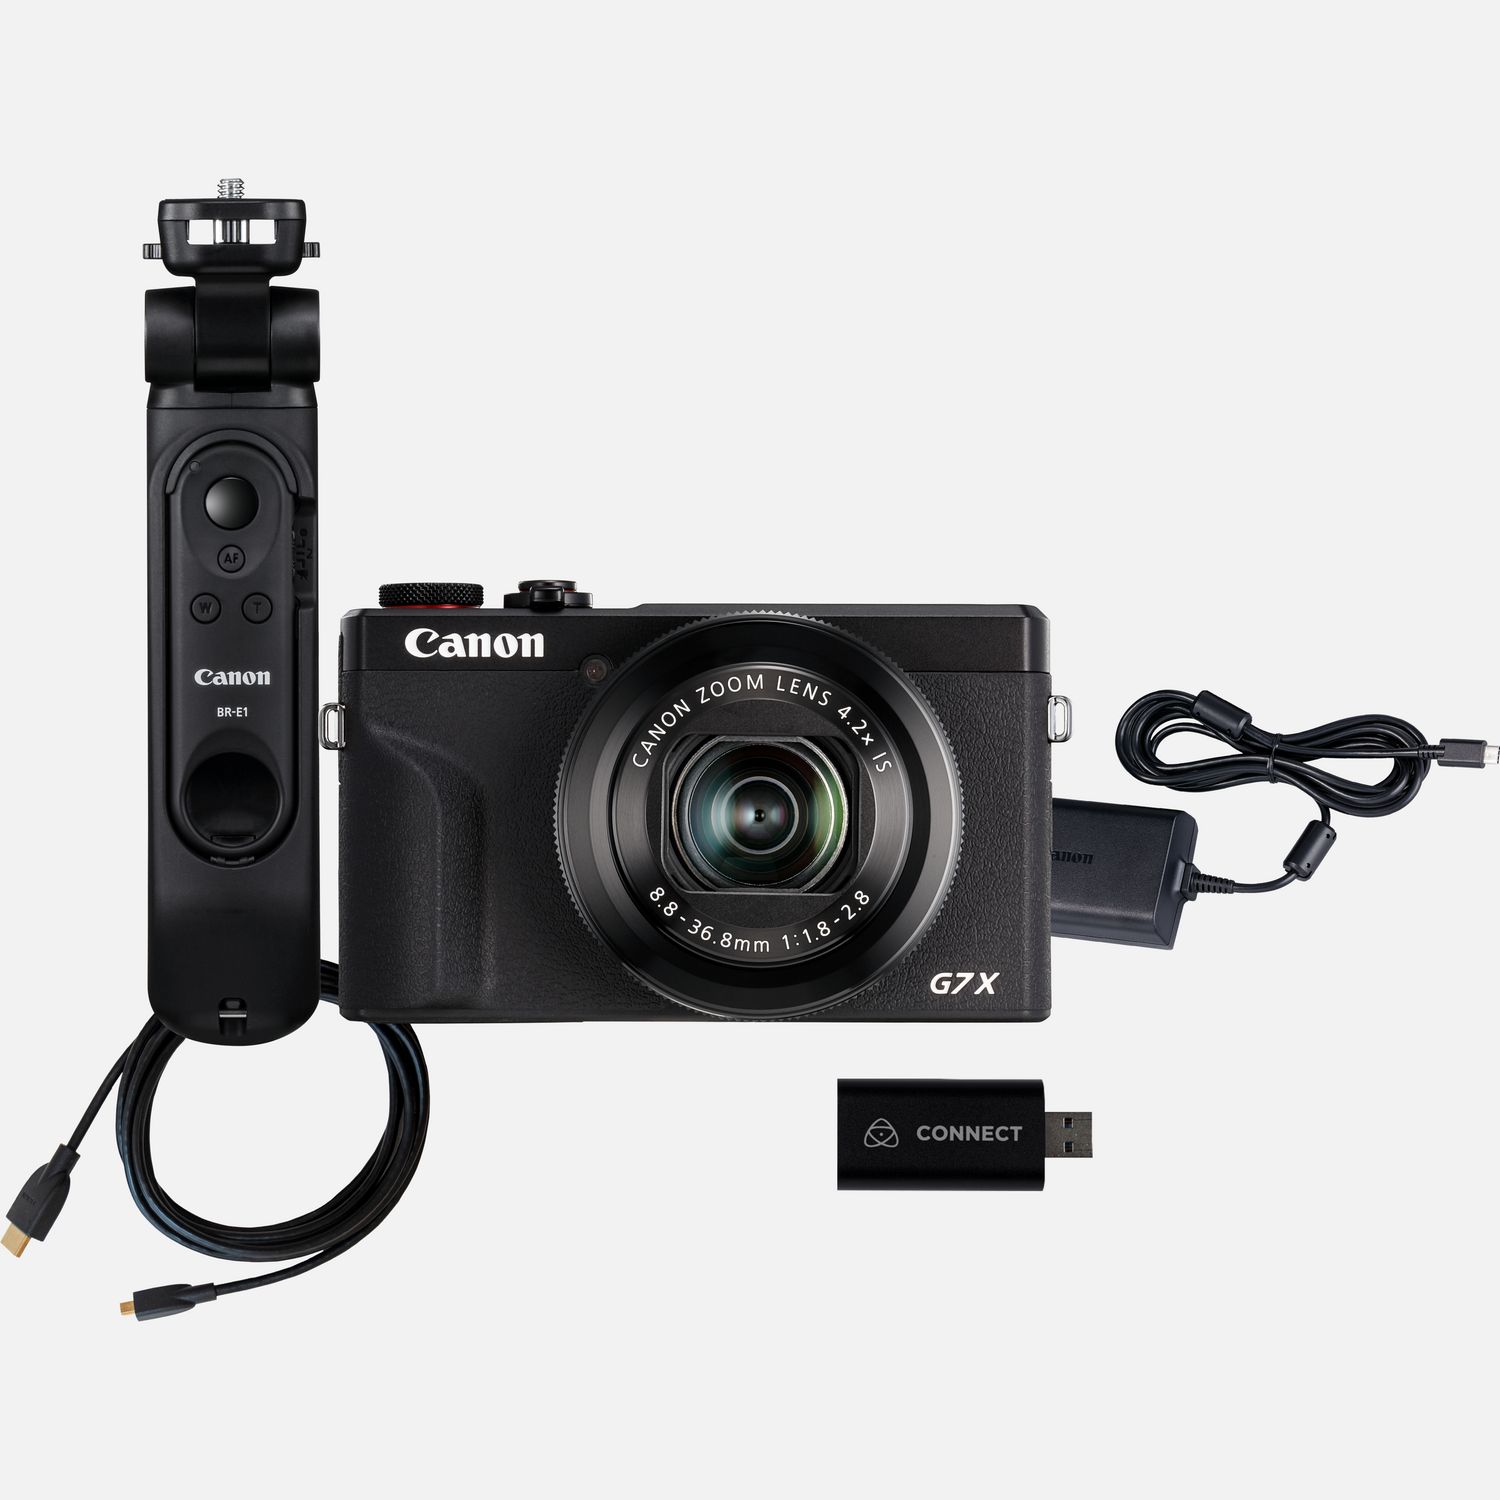 Image of Kit per live streaming con fotocamera compatta Canon PowerShot G7 X Mark III